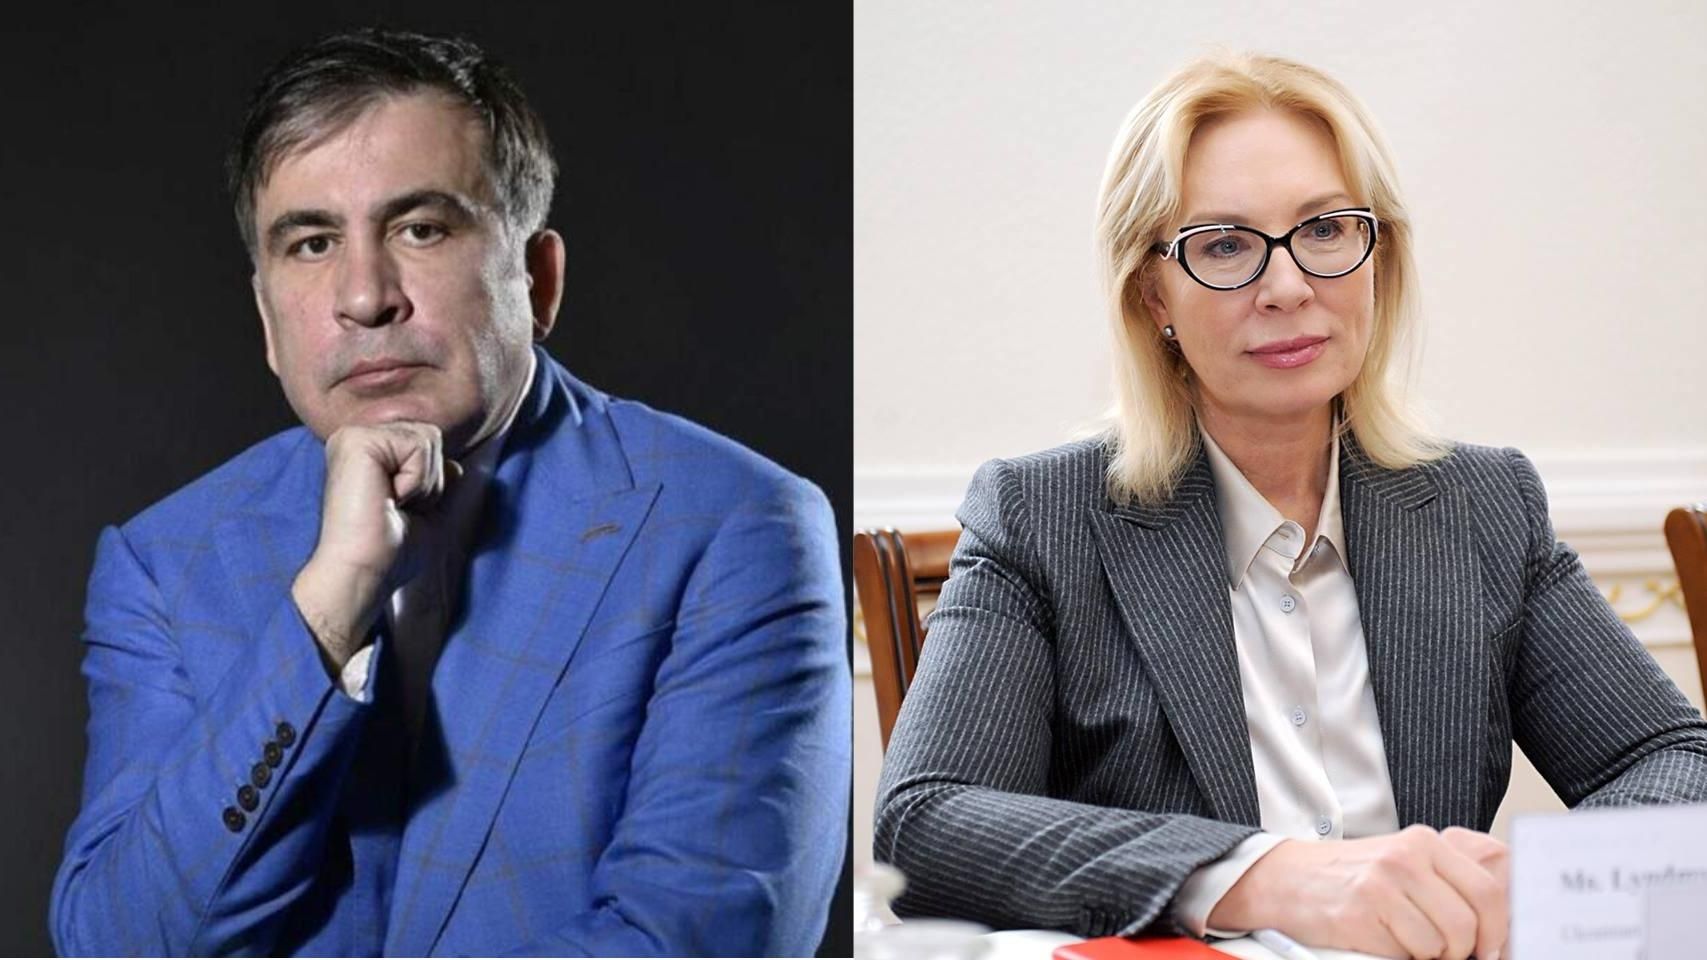 Саакашвили при этапировании избили, – Денисова